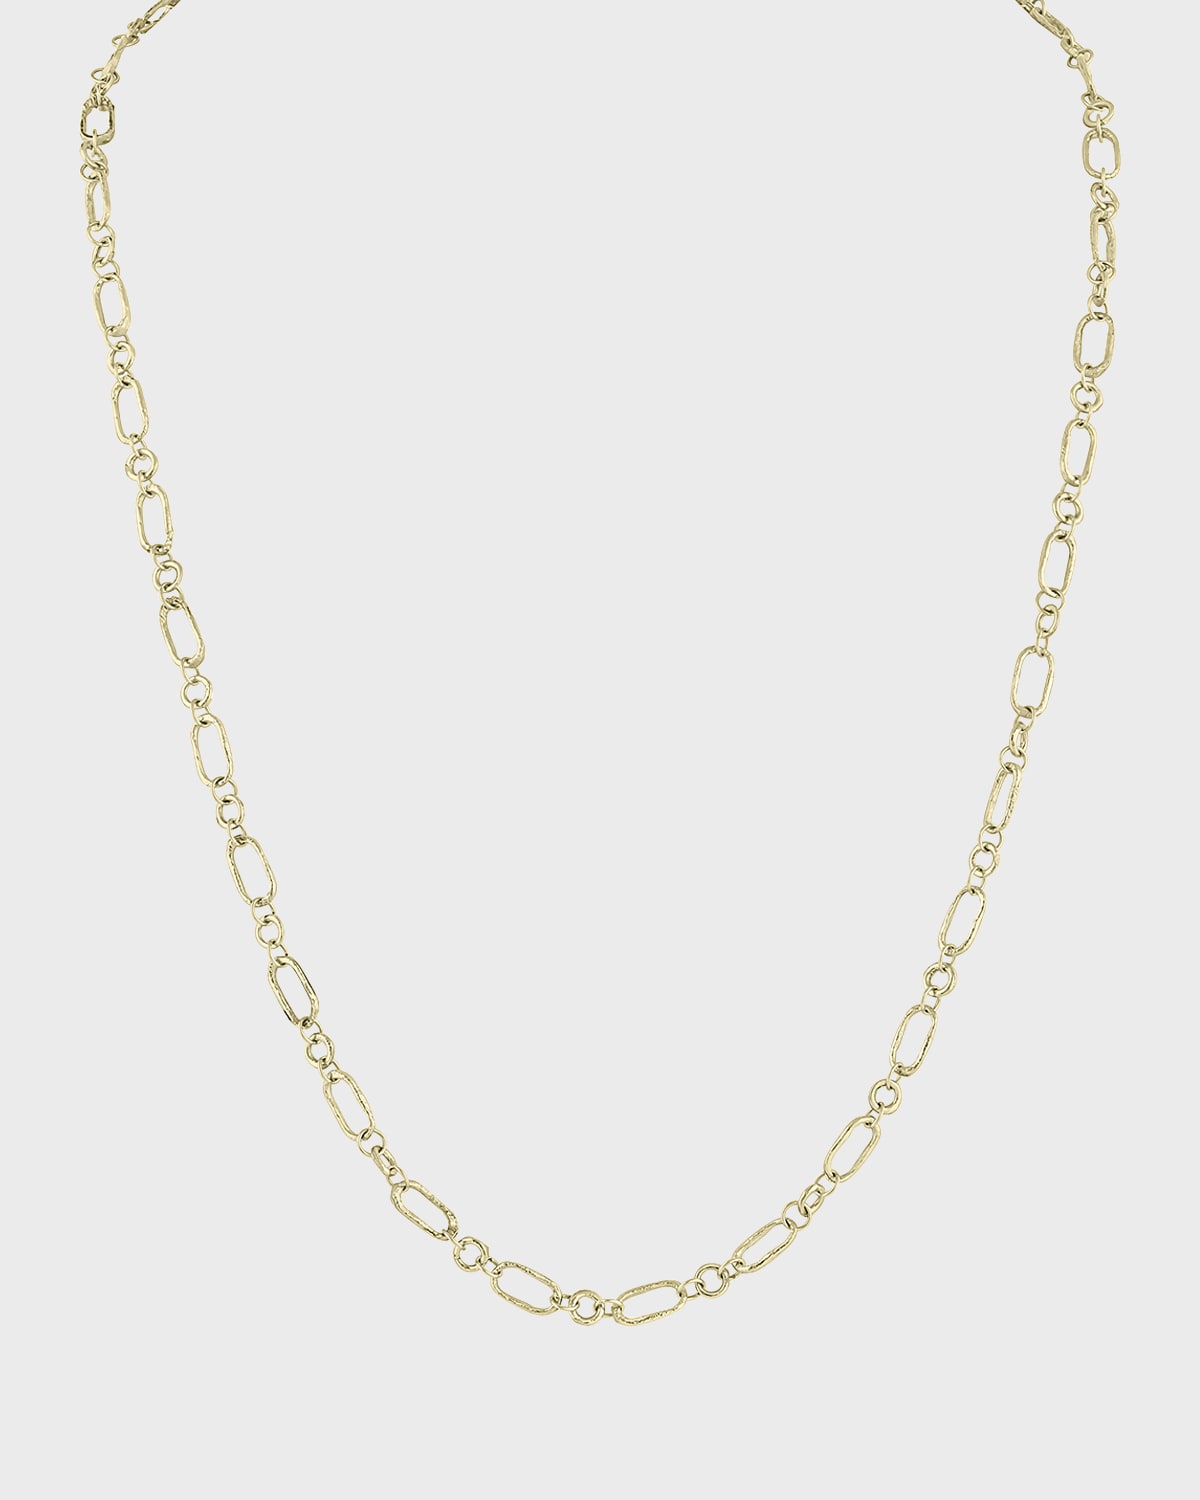 Dominique Cohen Yellow Gold Petite 'Paperclip' Layering Chain Necklace, 22"L